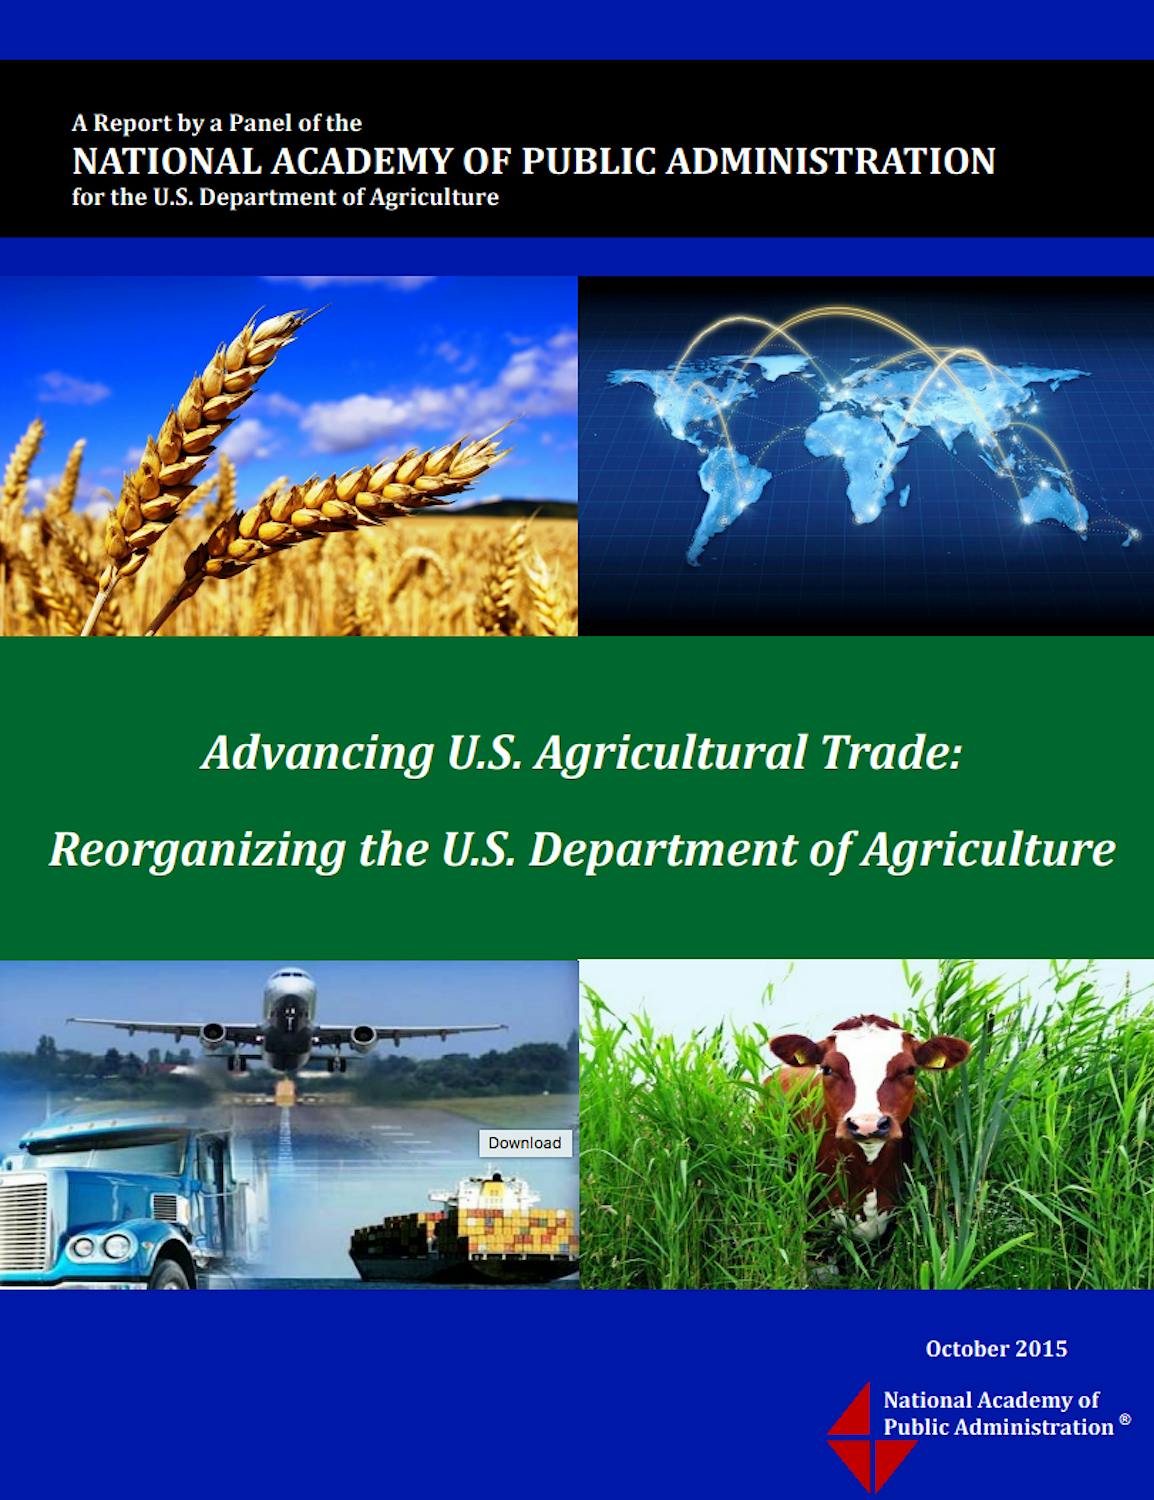 USDA Report 2015